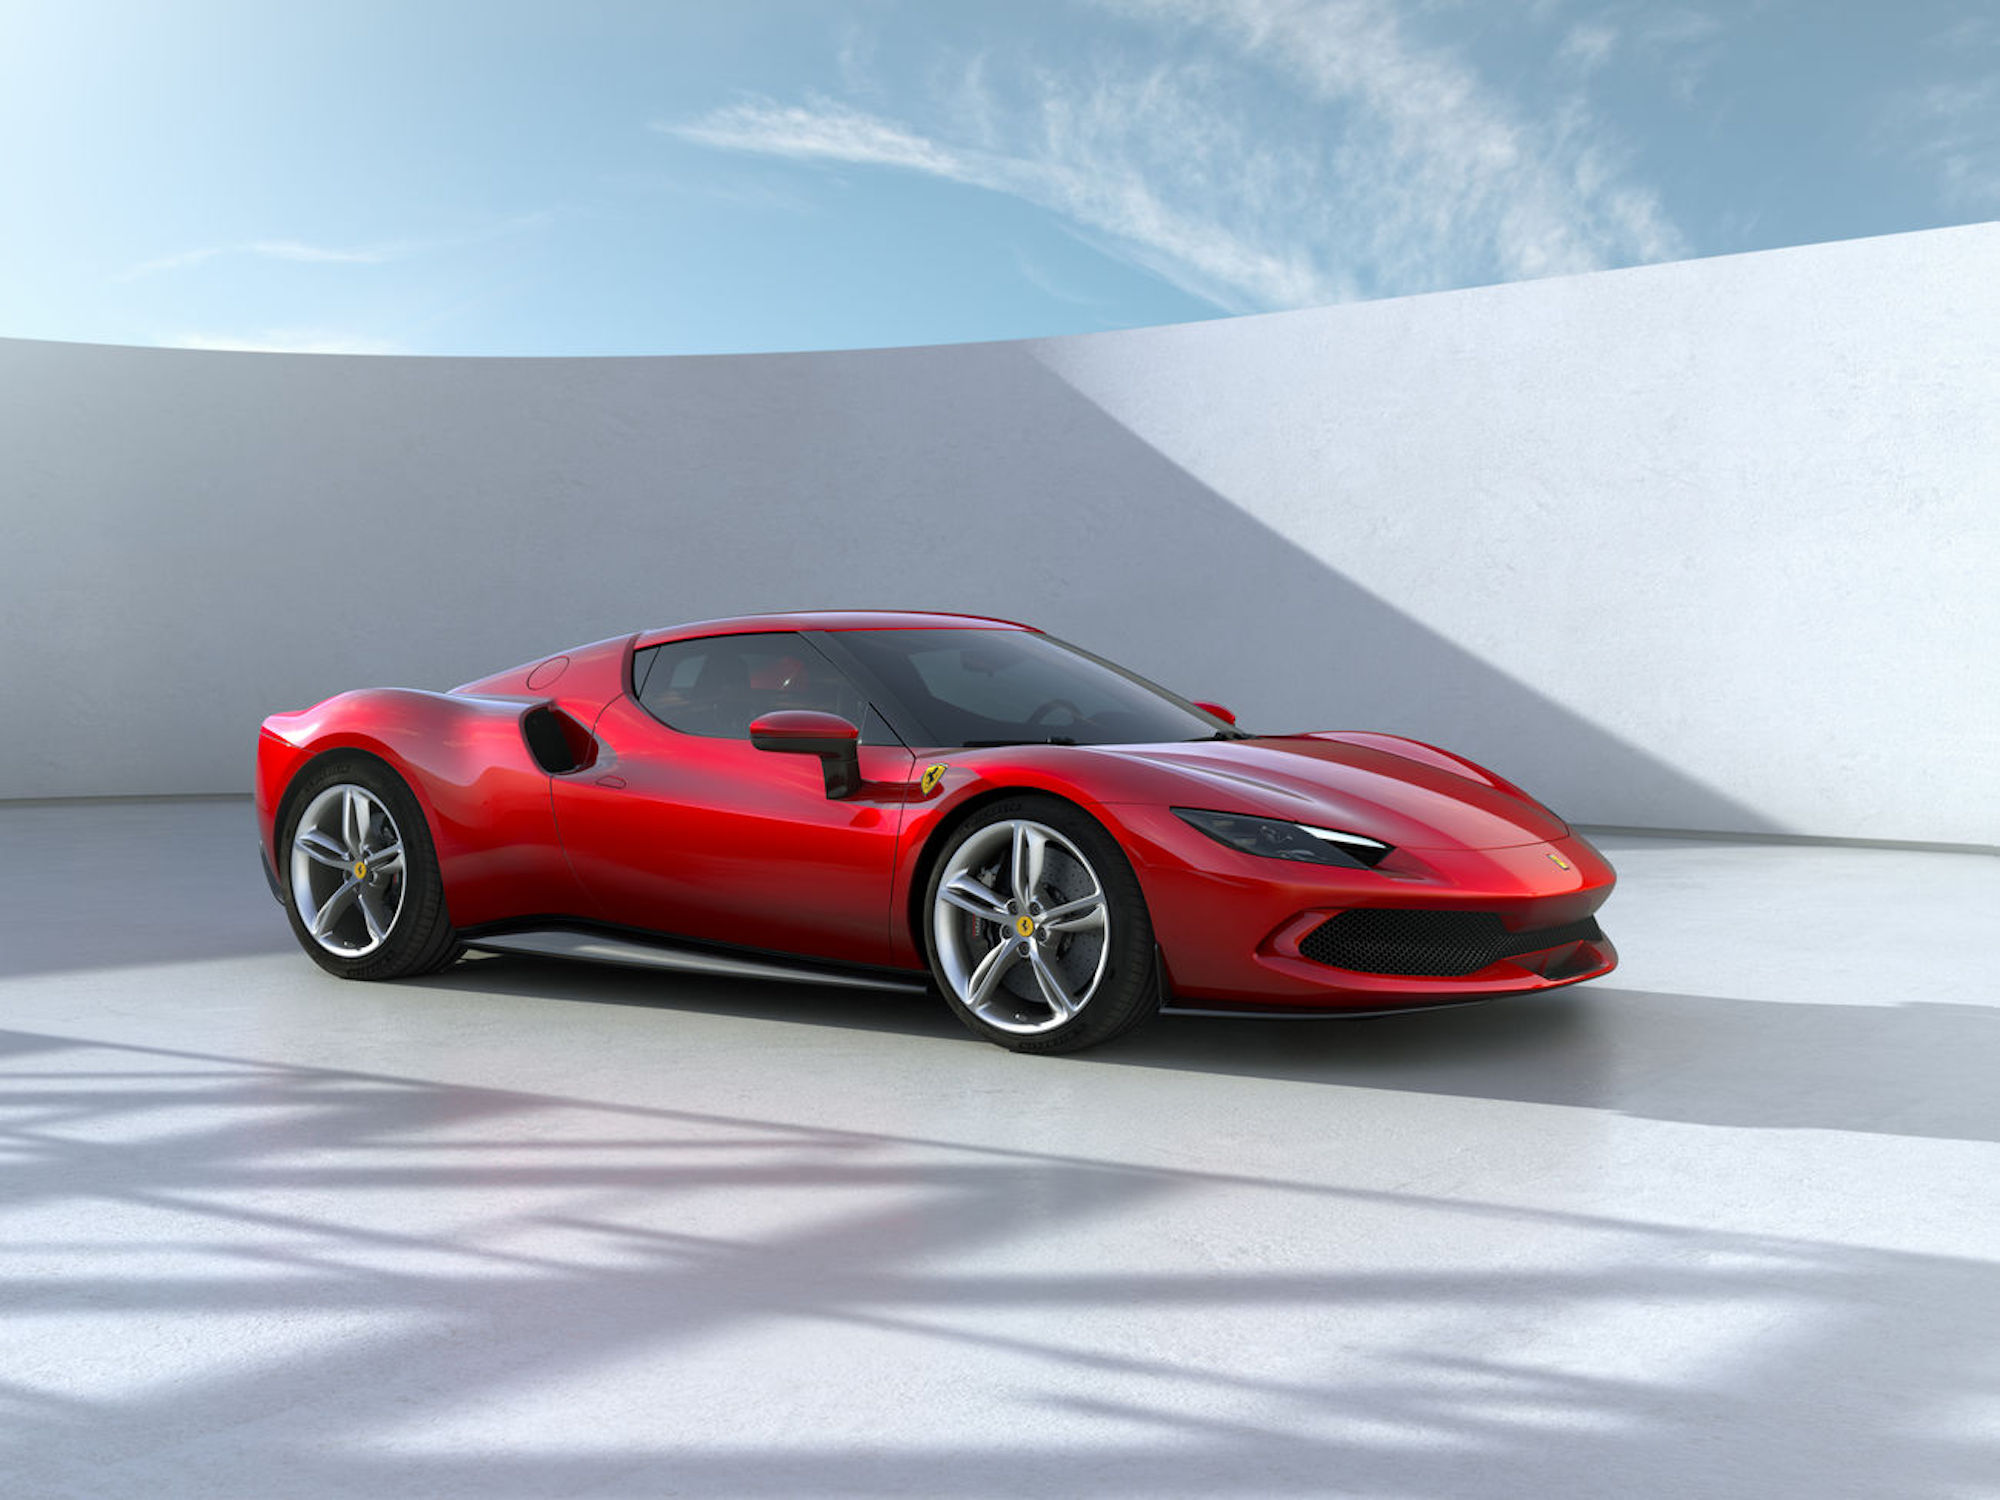 Ferrari’s new plug-in hybrid supercar is an 830-horsepower beast